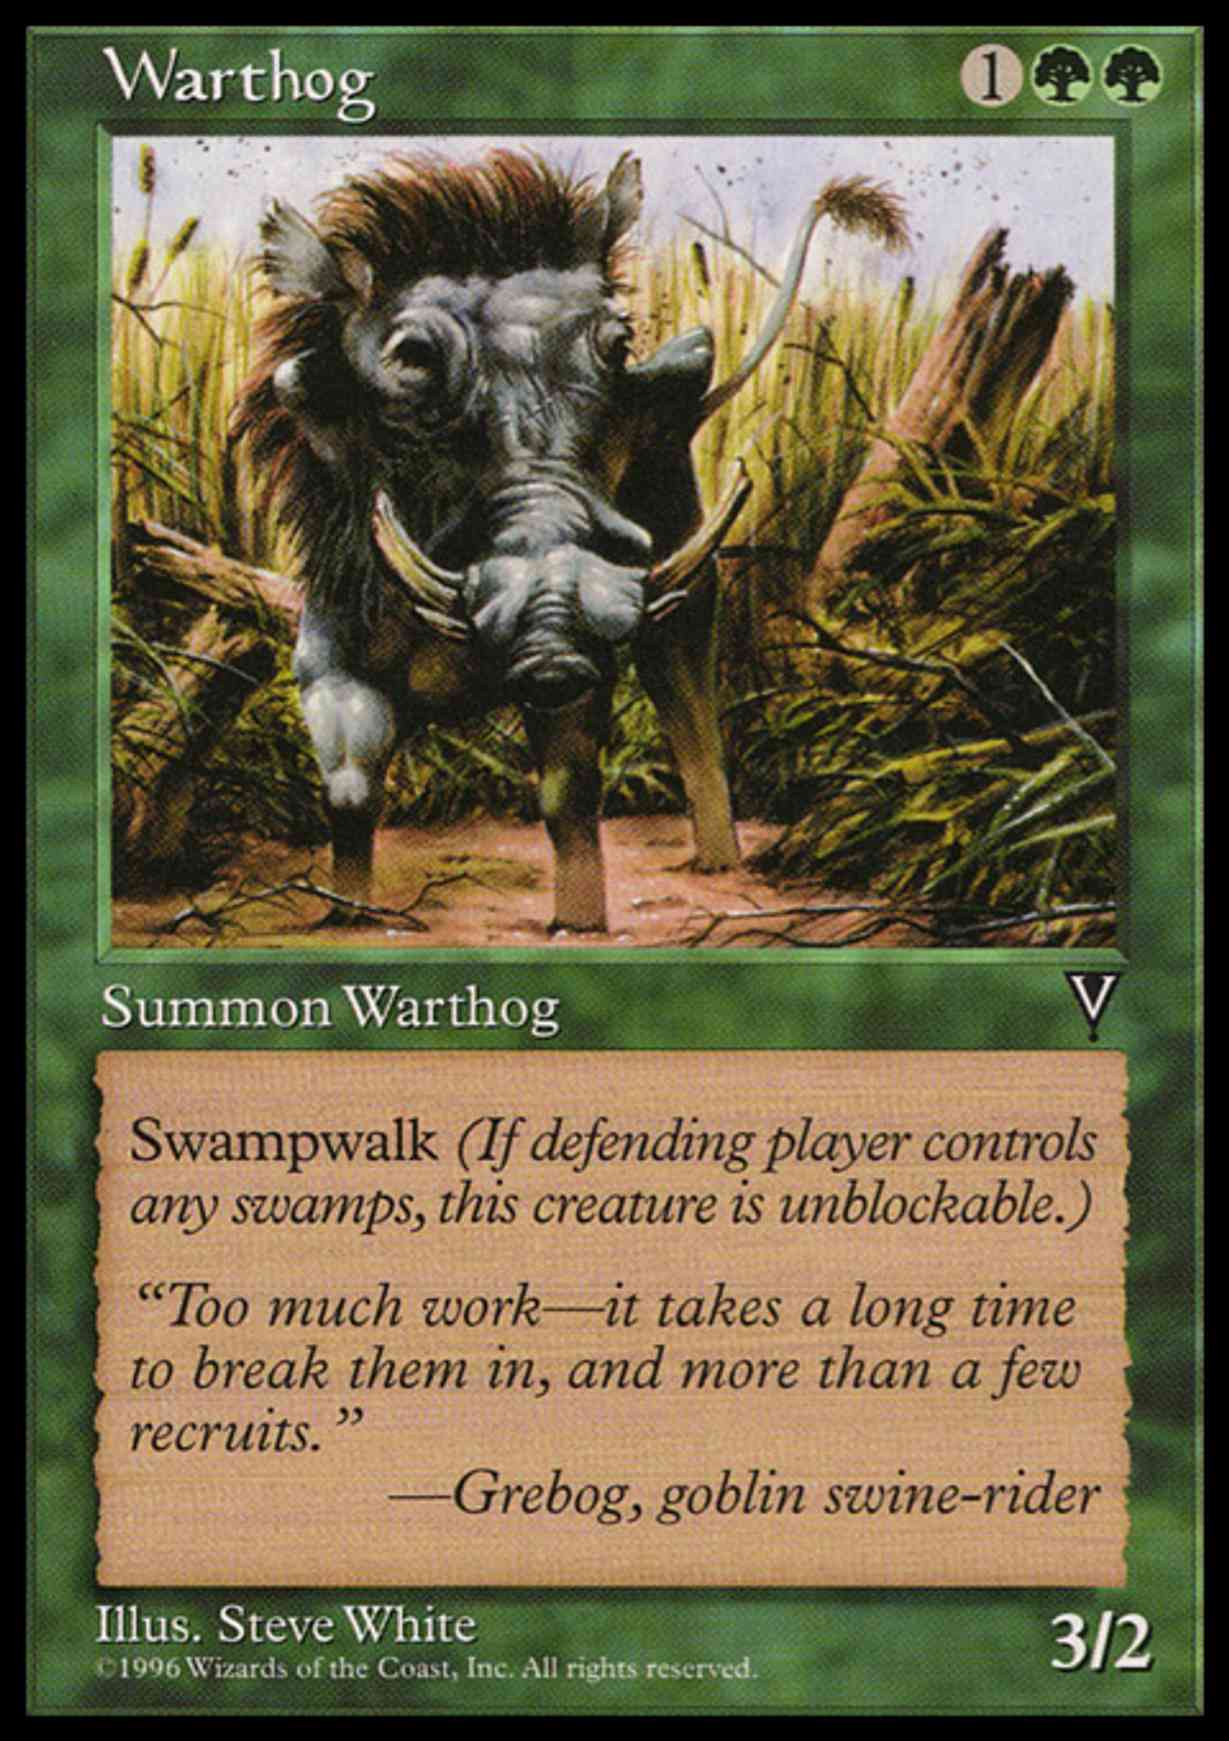 Warthog magic card front